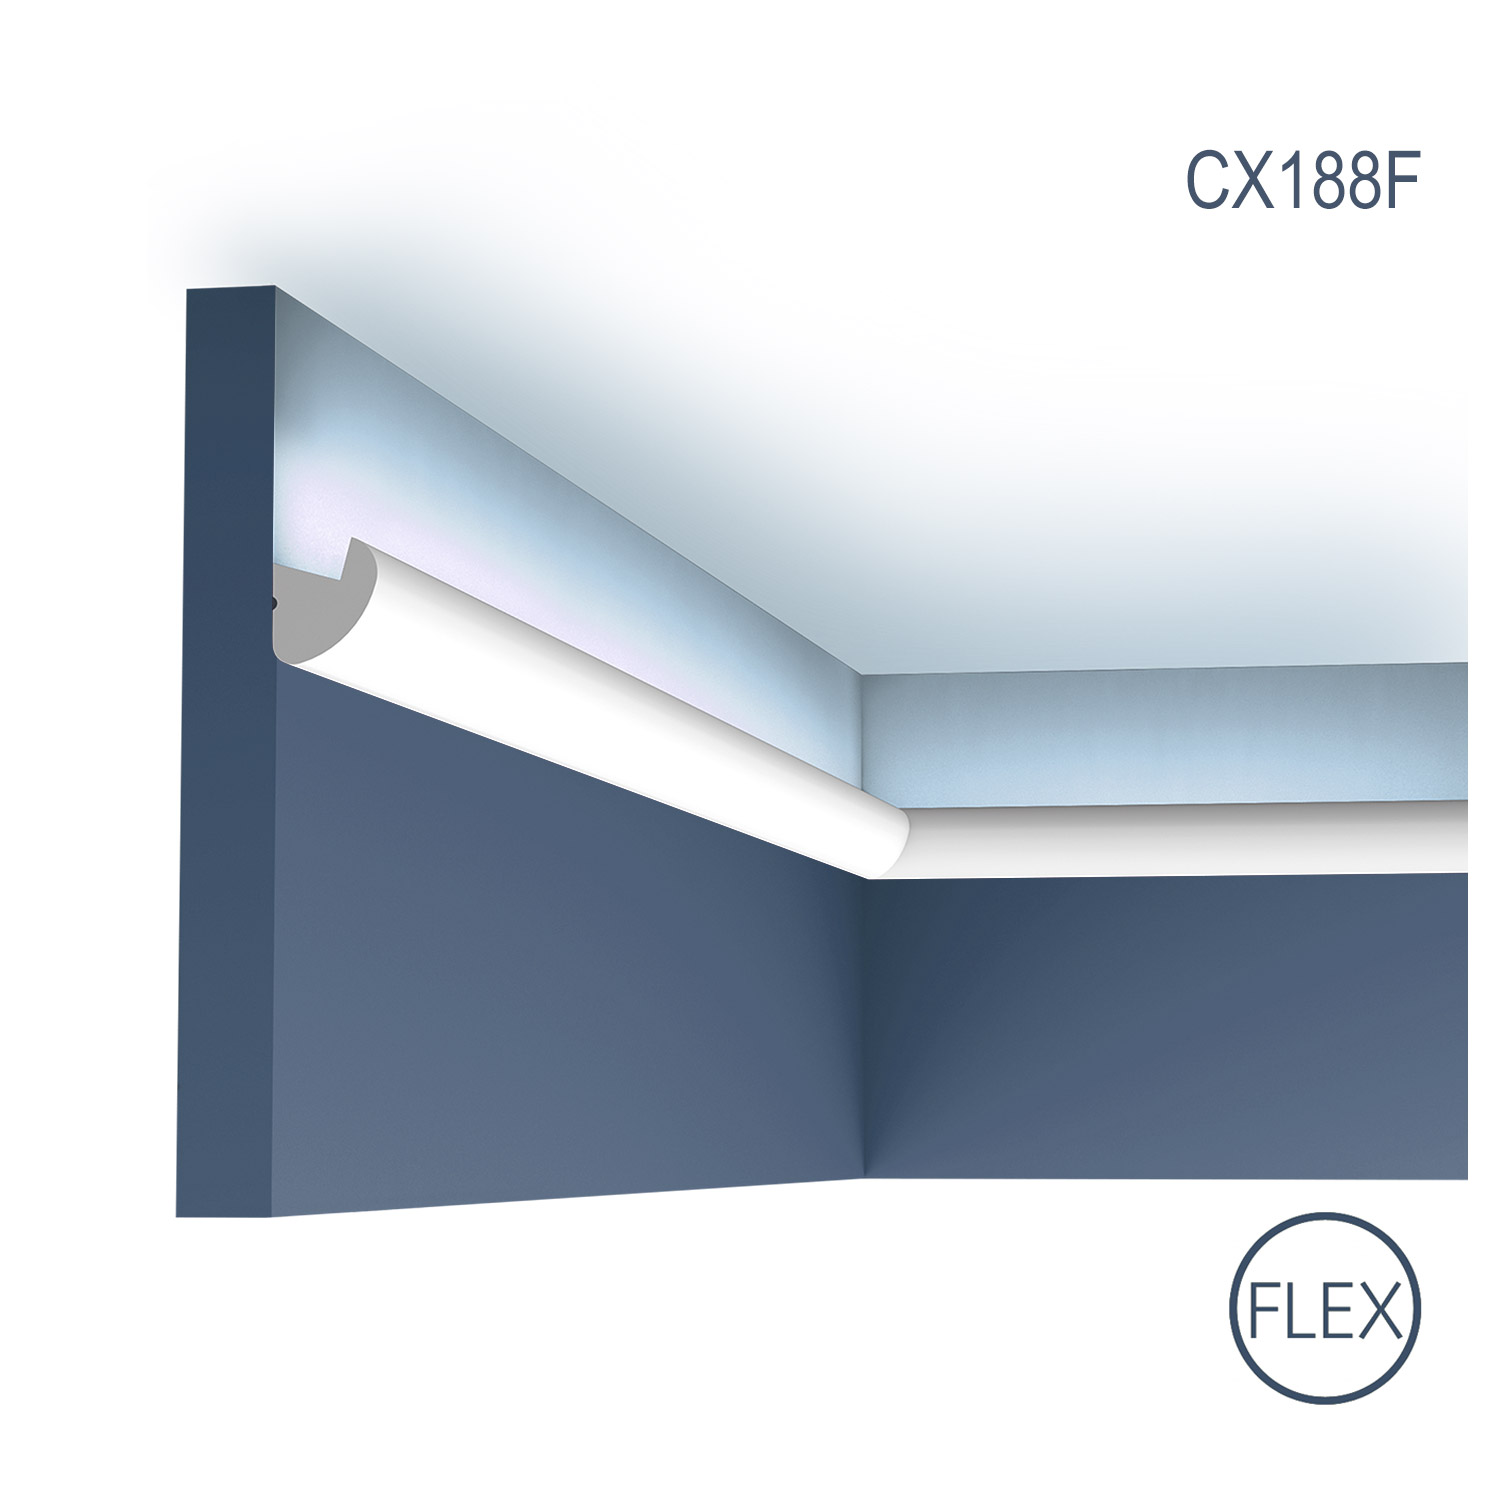 Cornisa Flex Axxent CX188F, Dimensiuni: 200 X 3 X 3.4 cm, Orac Decor